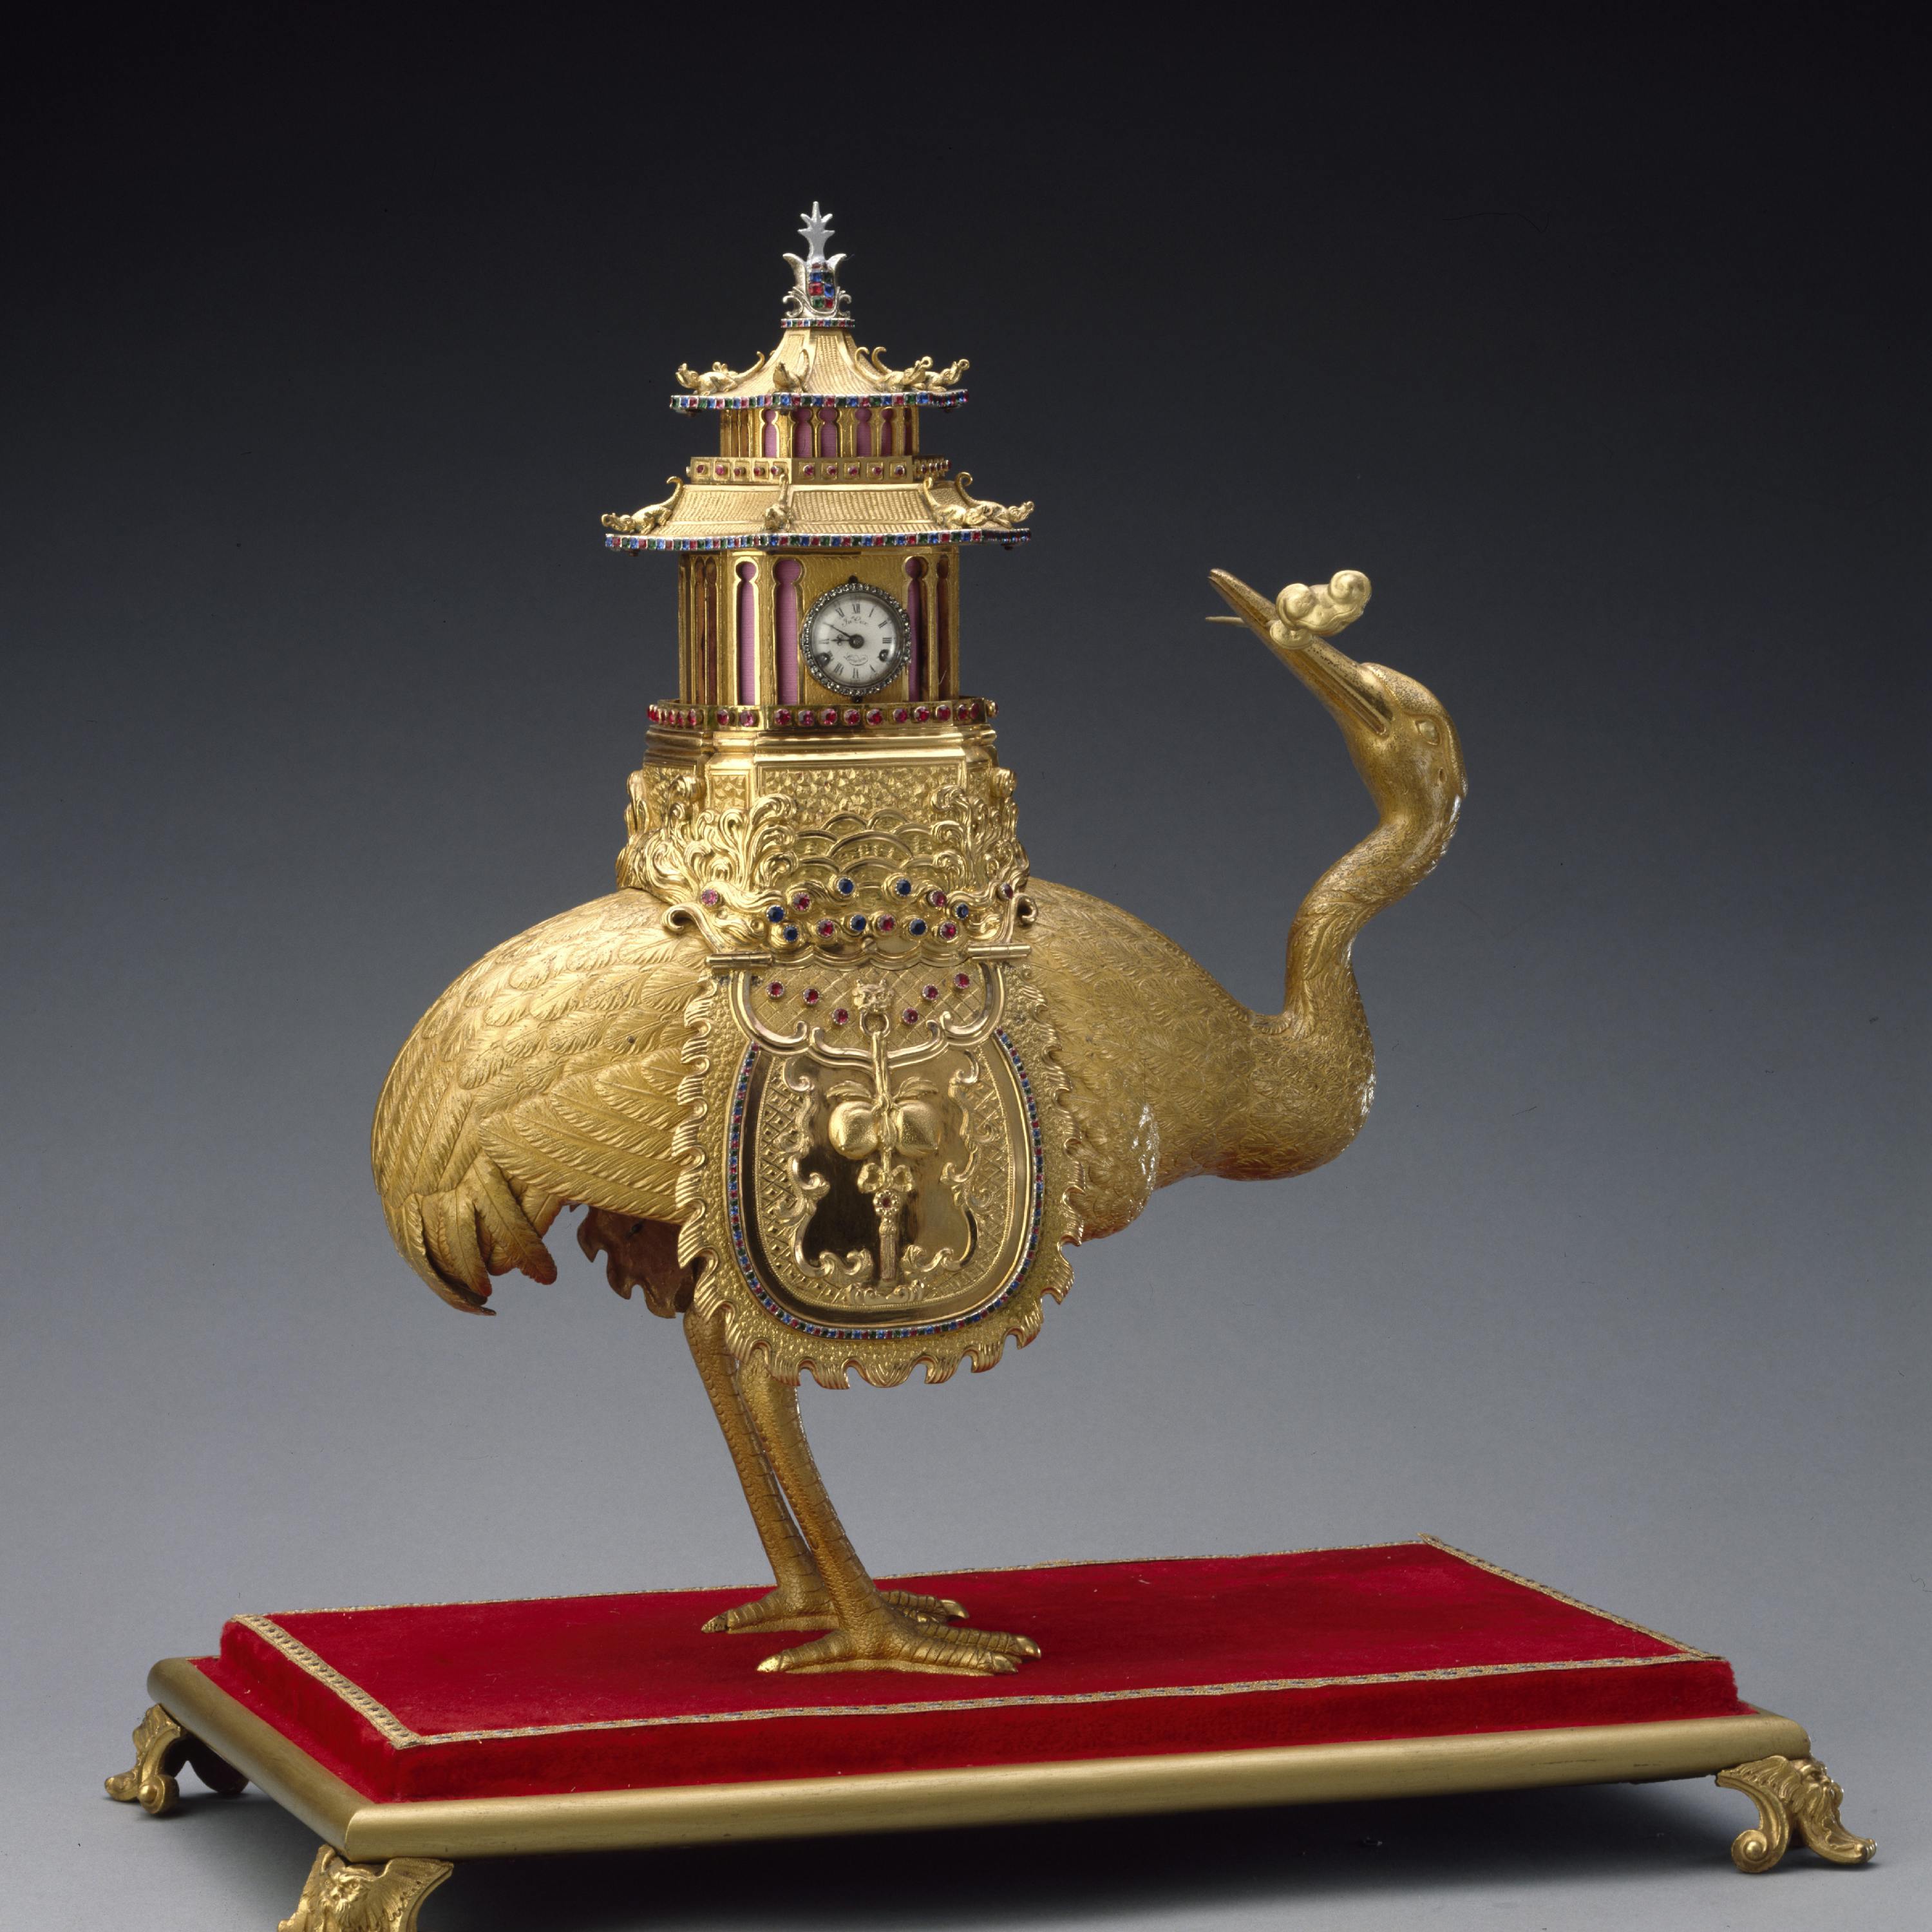 Clockwork Treasures from China’s Forbidden City